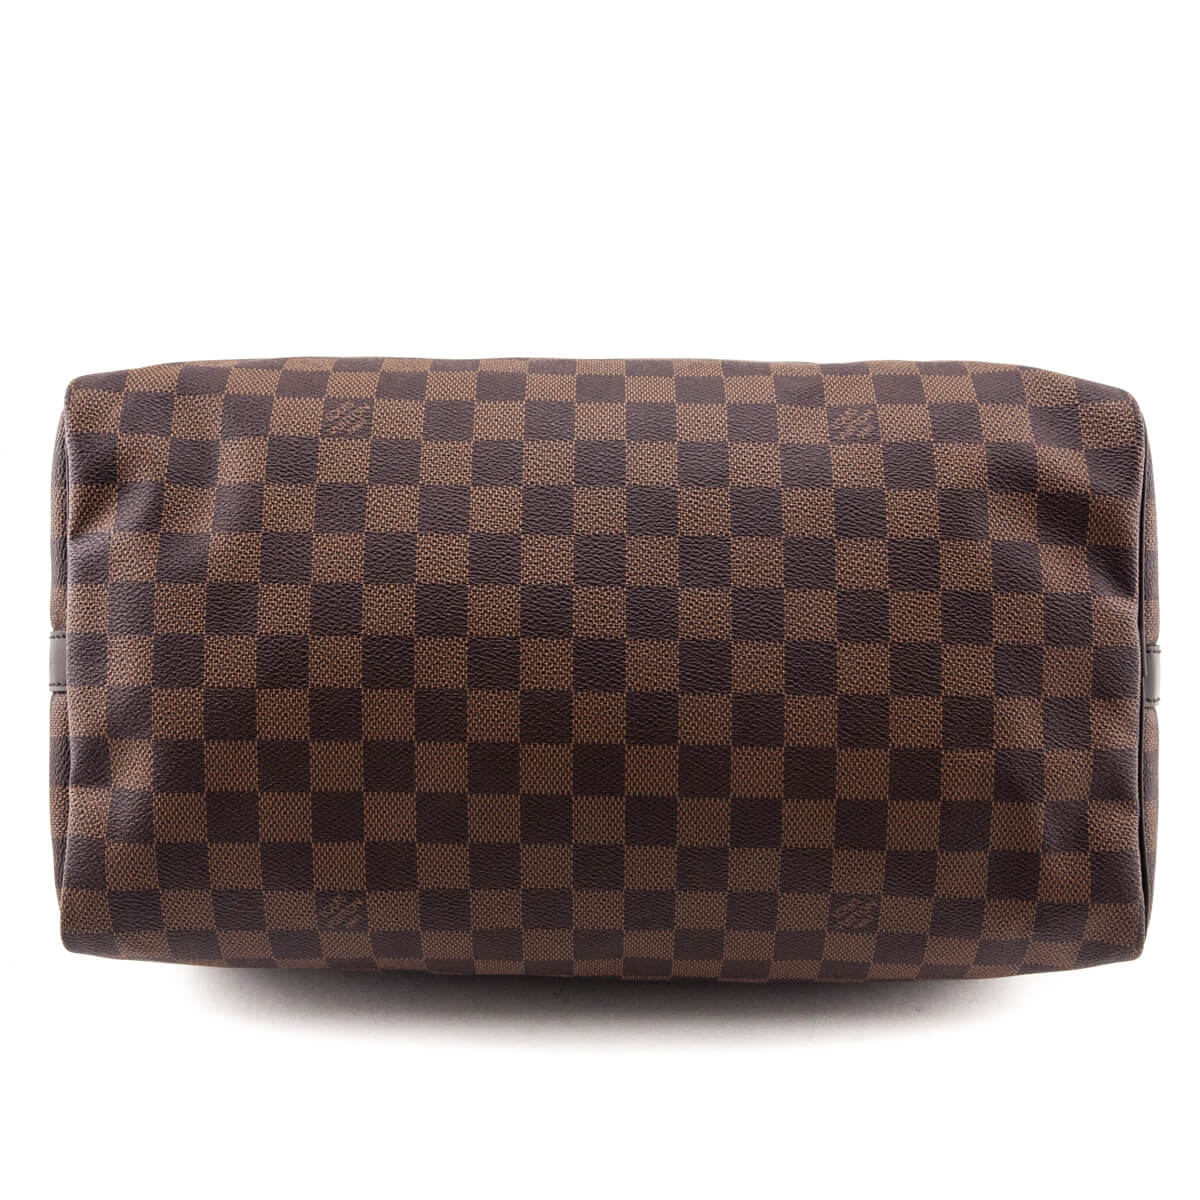 Louis Vuitton Damier Ebene Speedy Bandouliere 35 - Love that Bag etc - Preowned Authentic Designer Handbags & Preloved Fashions